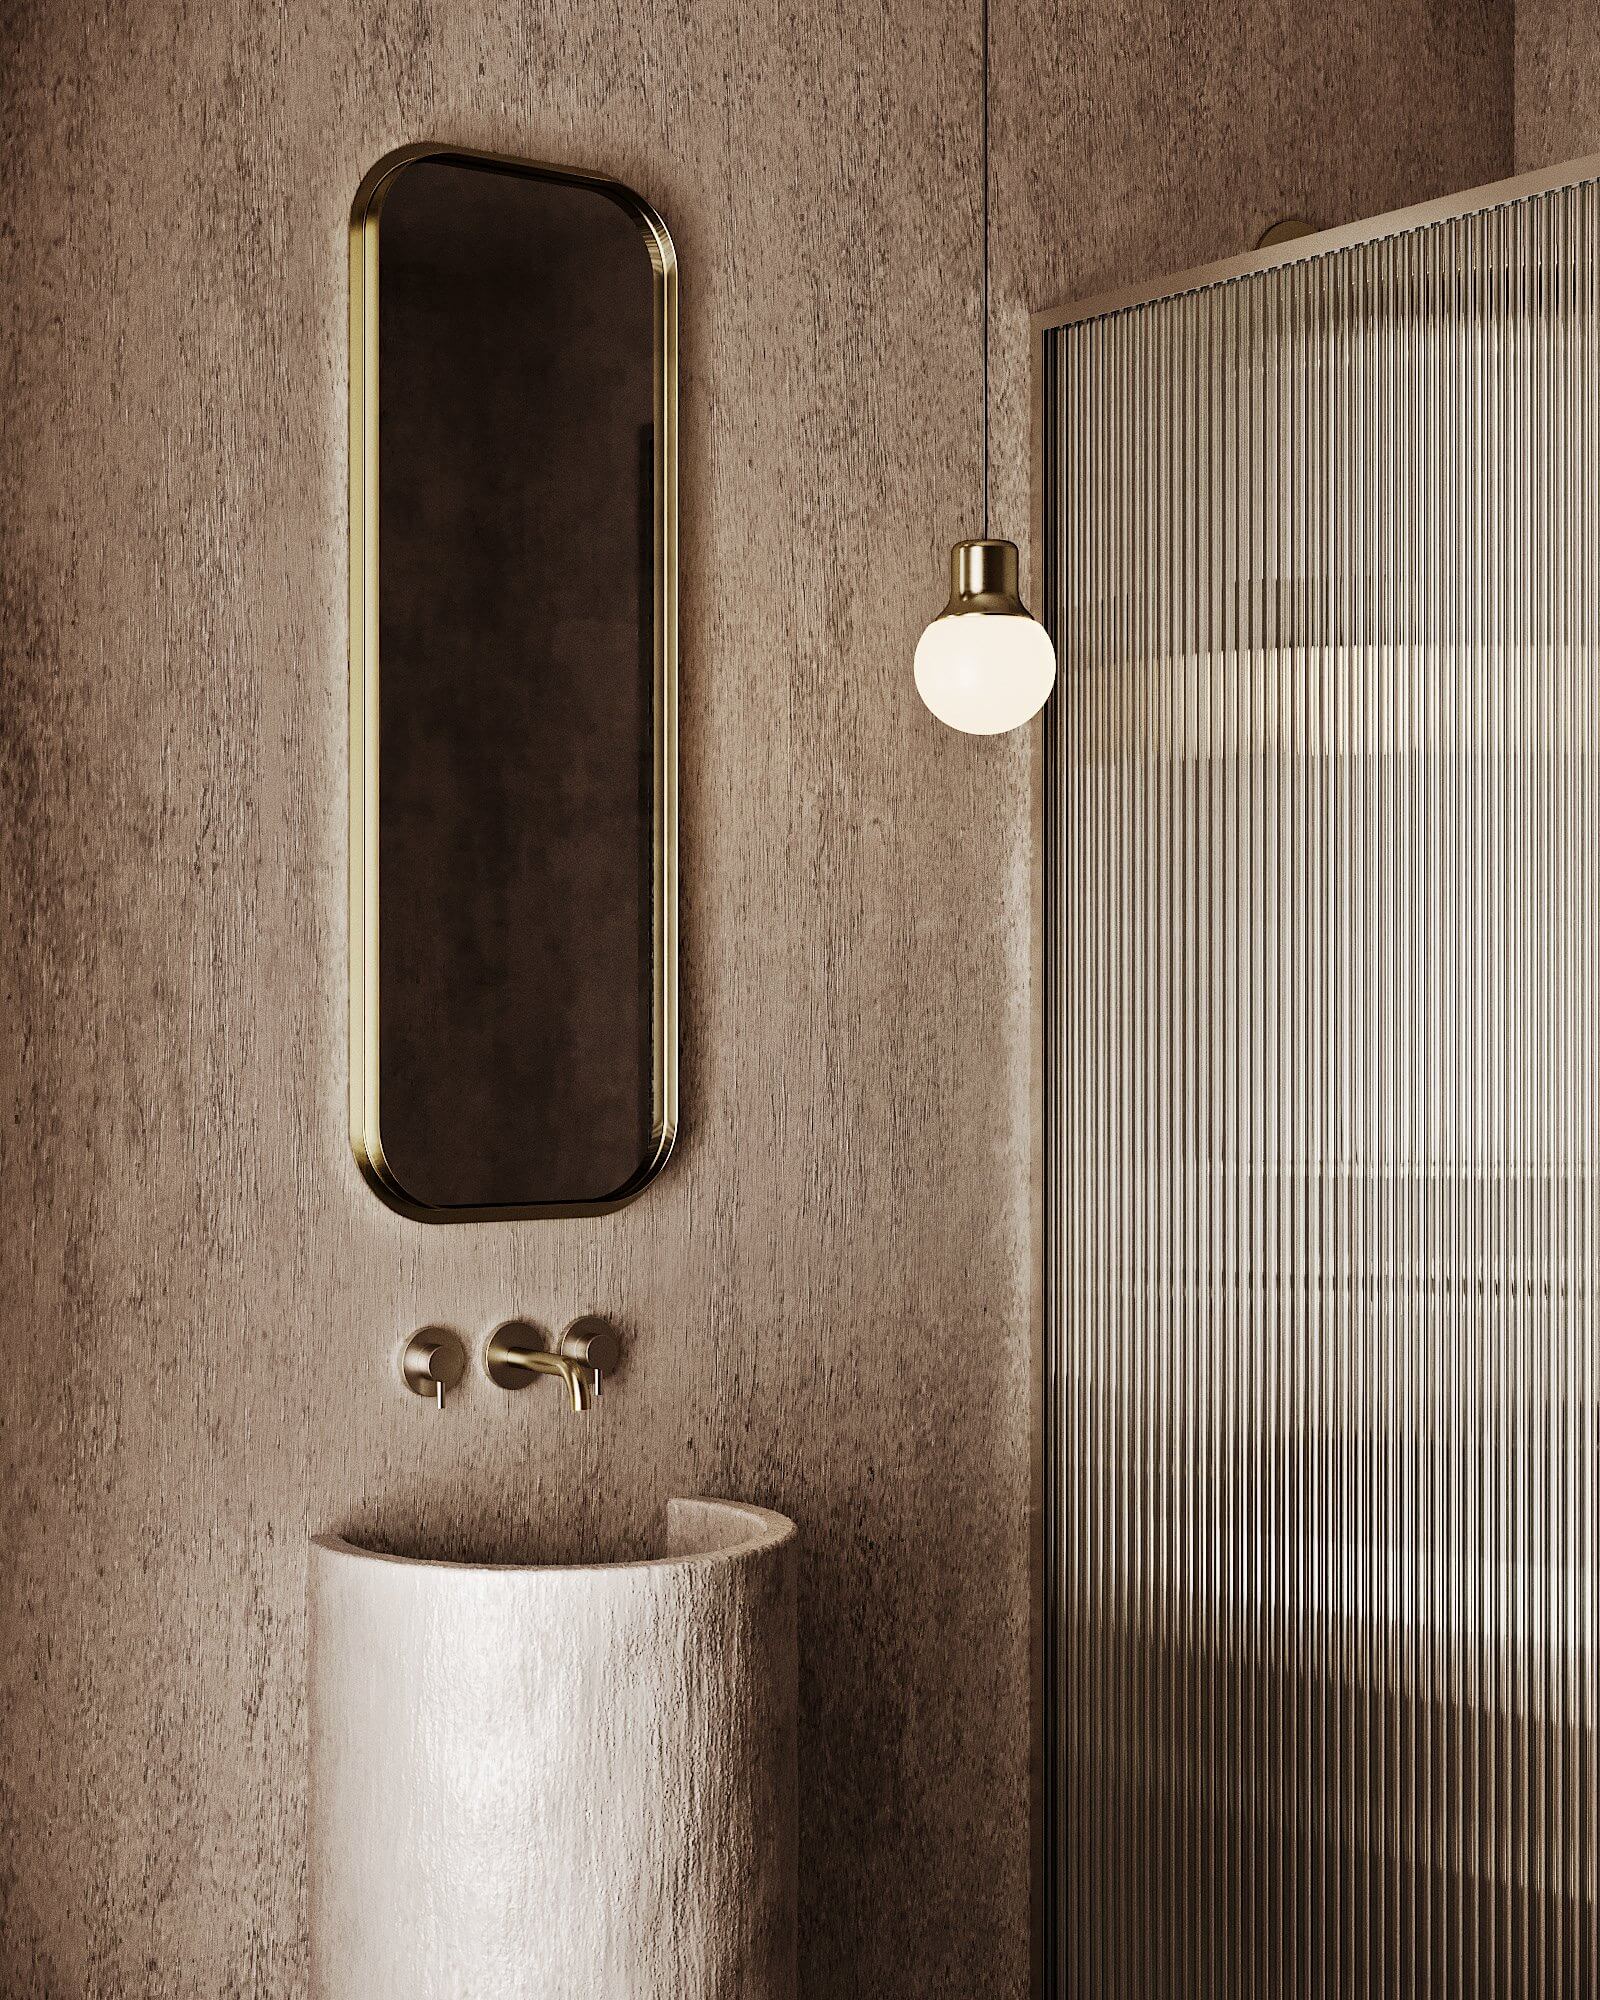 Monochrome bathroom design mirror gold frame gold faucet - cgi visualization